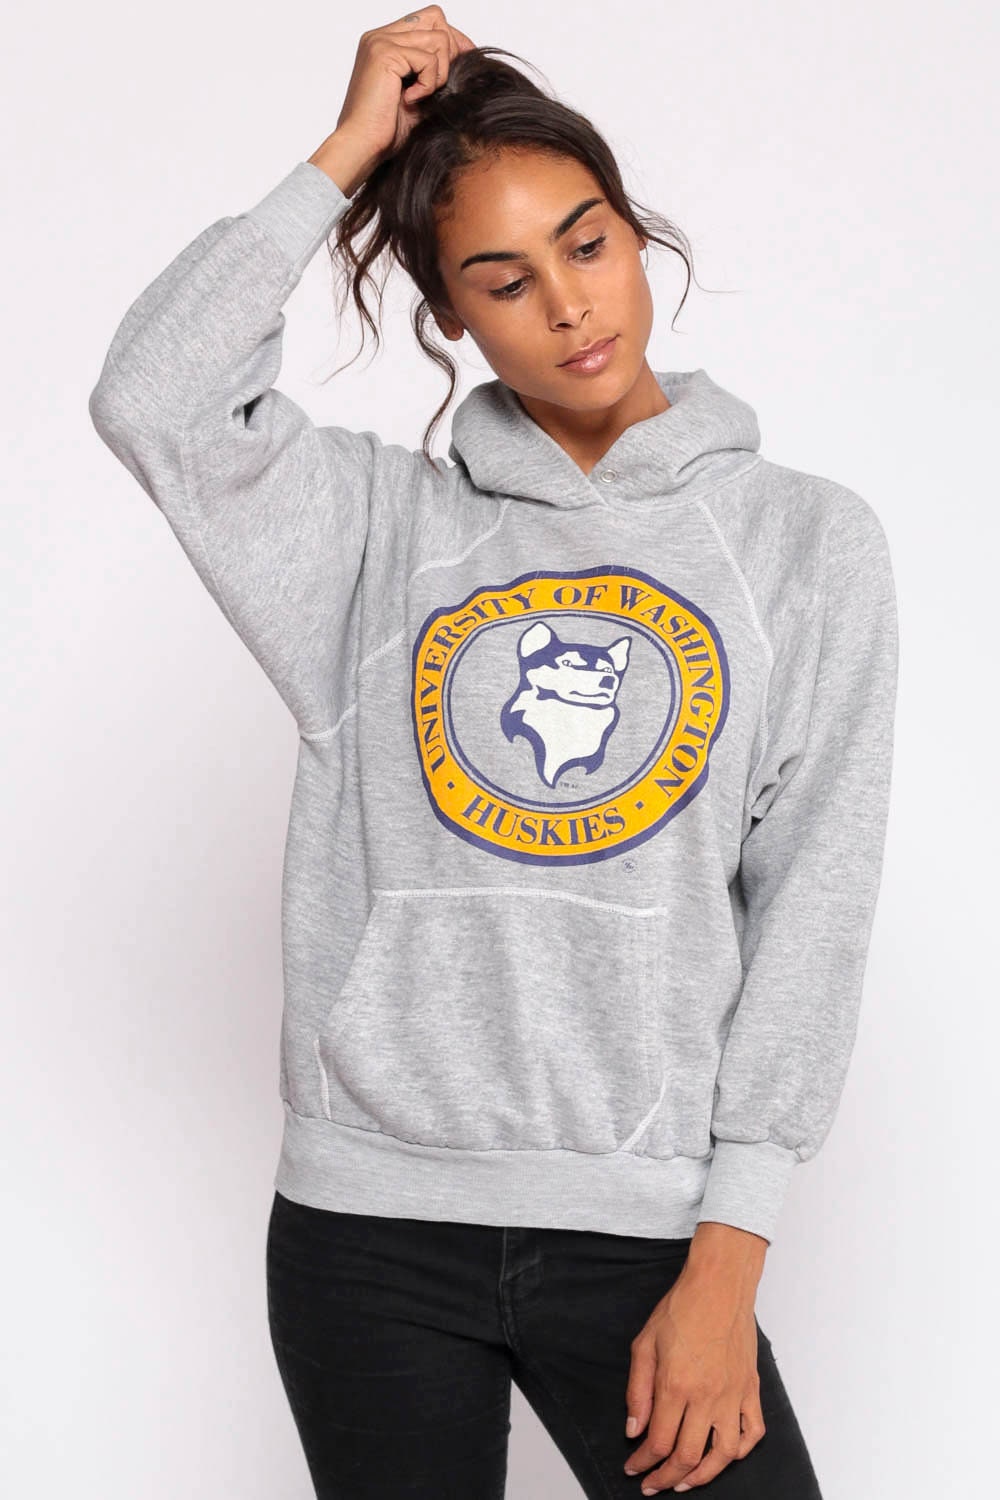 Washington Huskies Sweatshirt University Shirt 80s Hooded Retro Grey ...